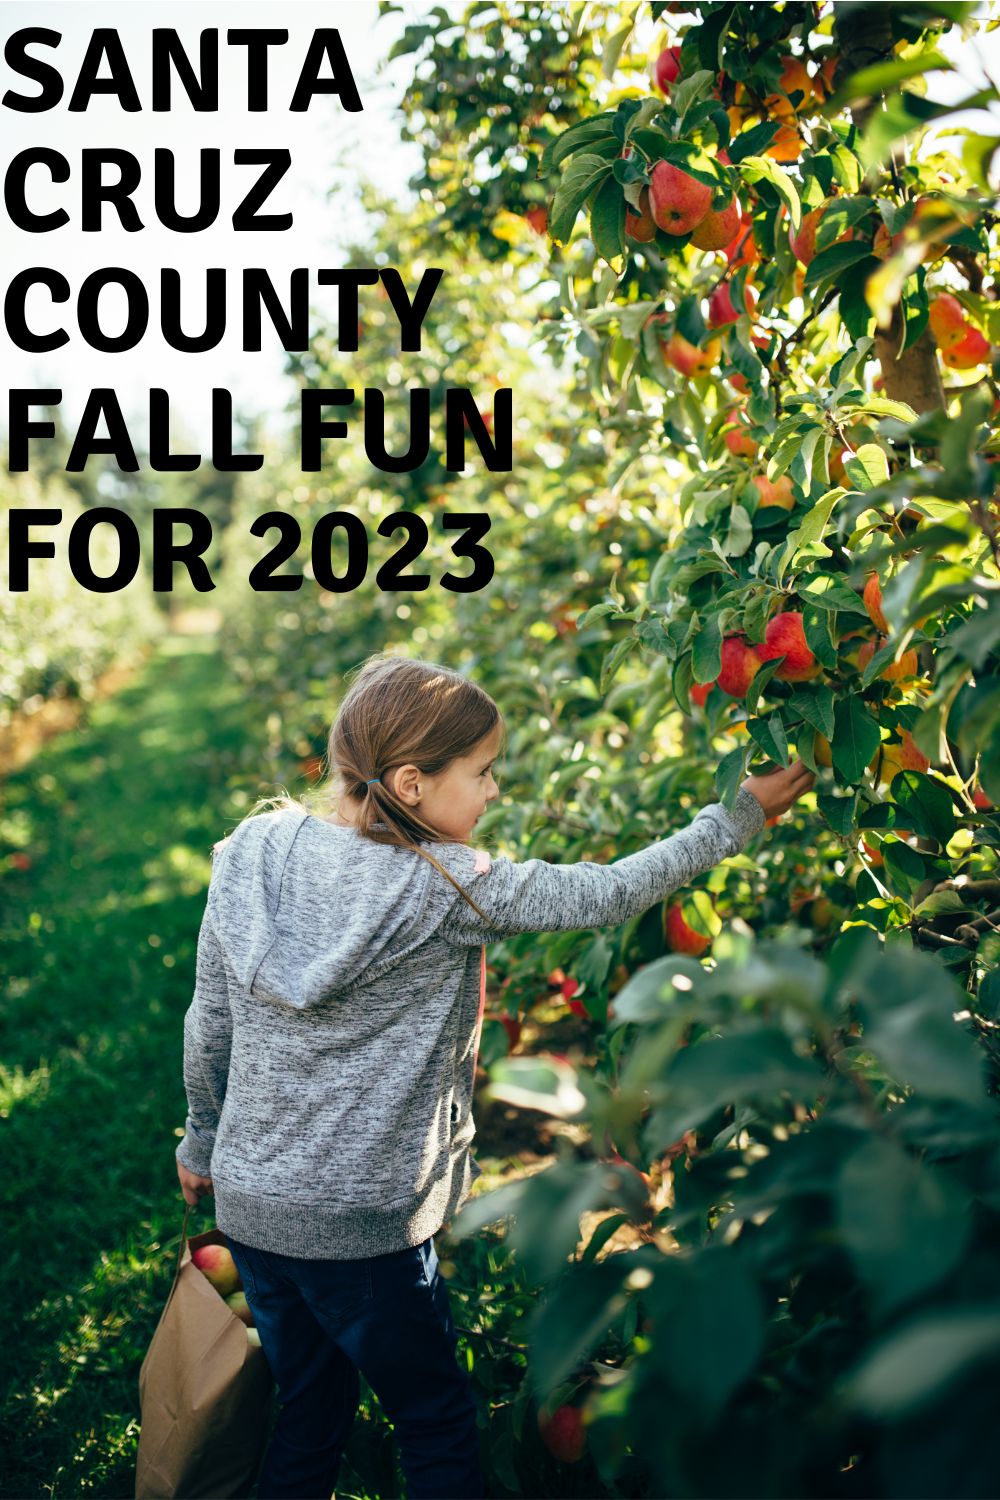 Santa Cruz County Fall Fun for 2023